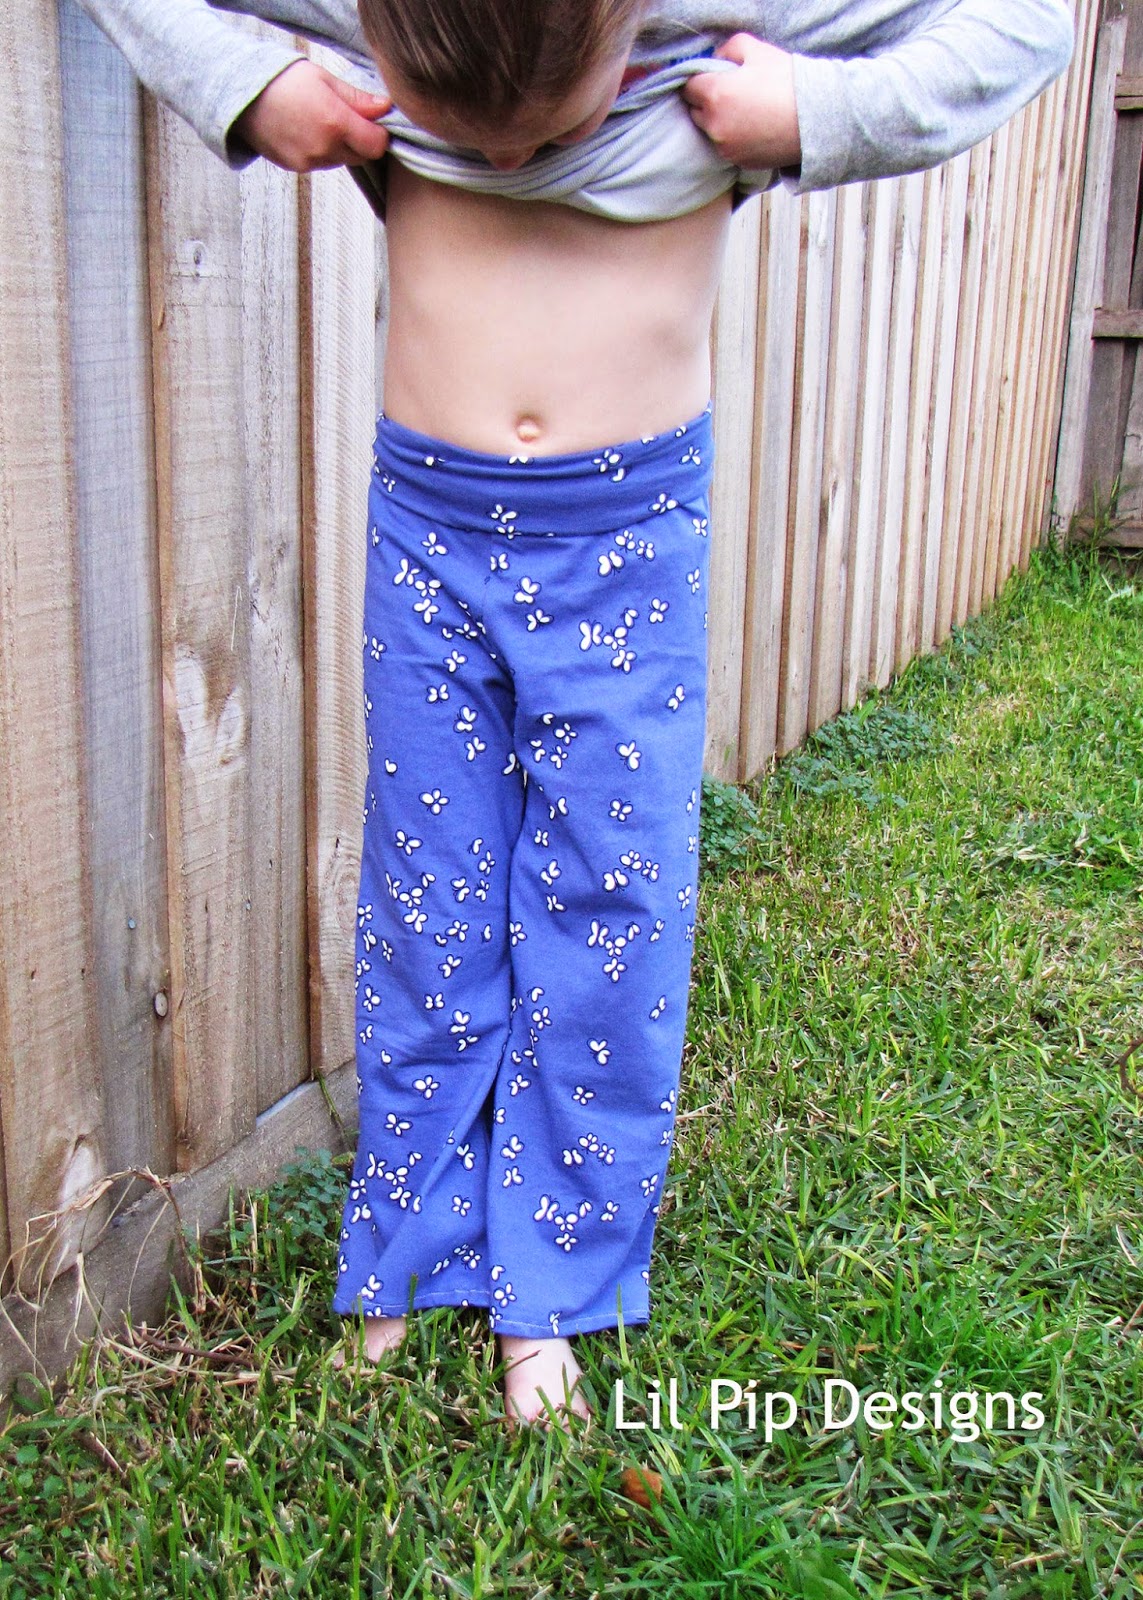 Lil Pip Designs: Kids Clothing Week - Day 1